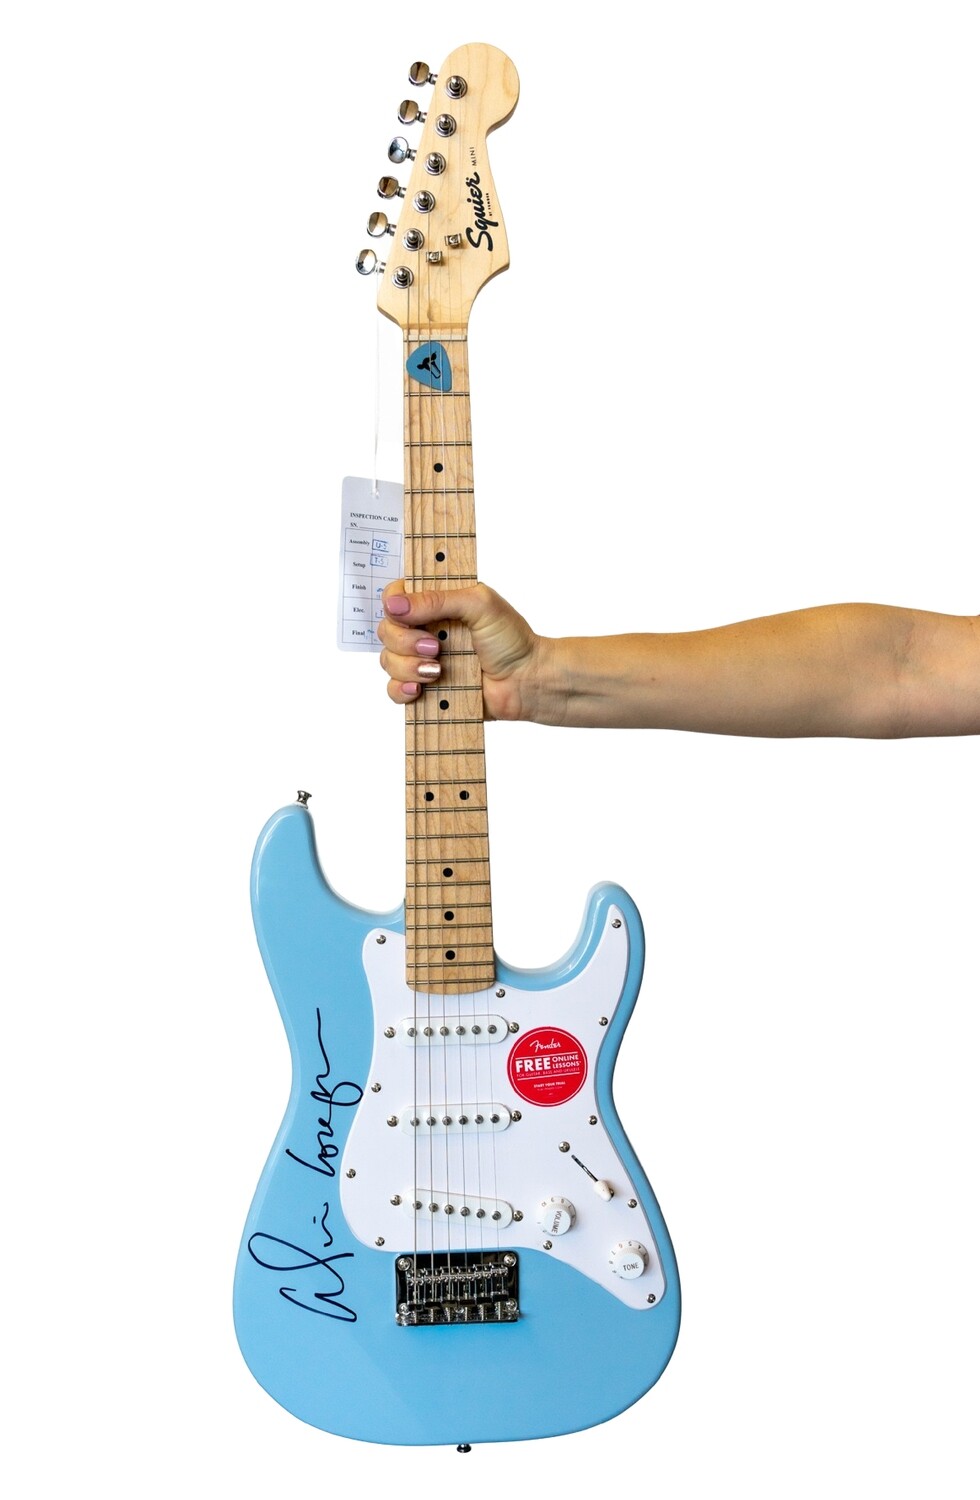 Alice Cooper Autographed Blue Fender Squier guitar